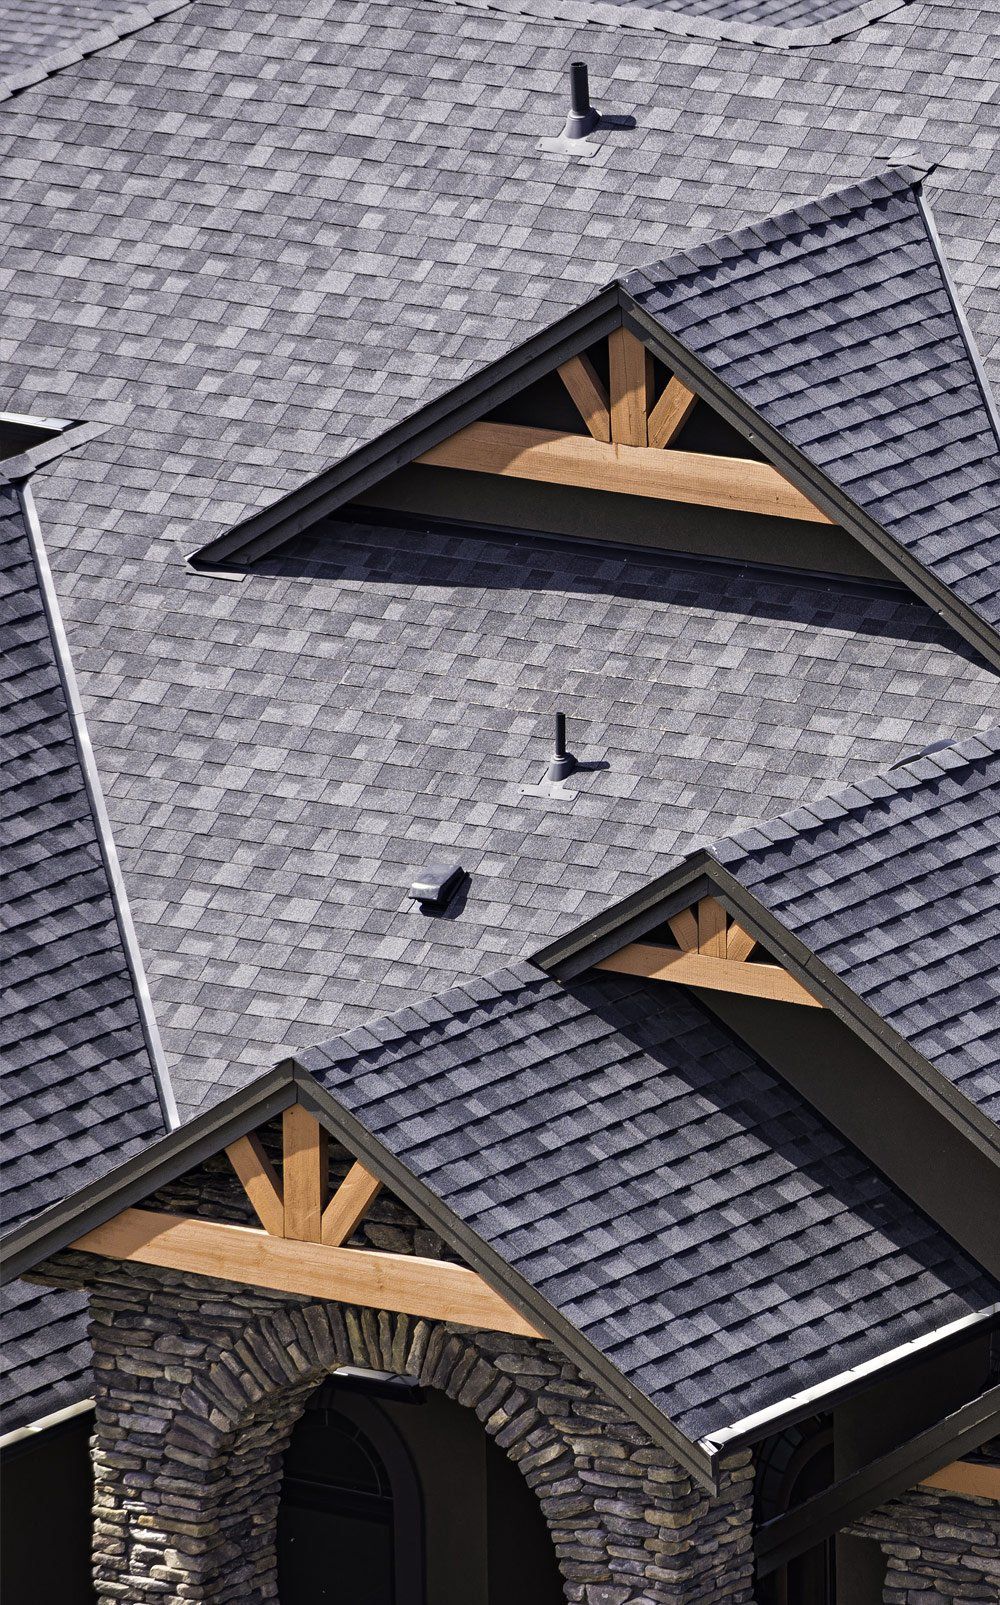 Asphalt shingle roofs